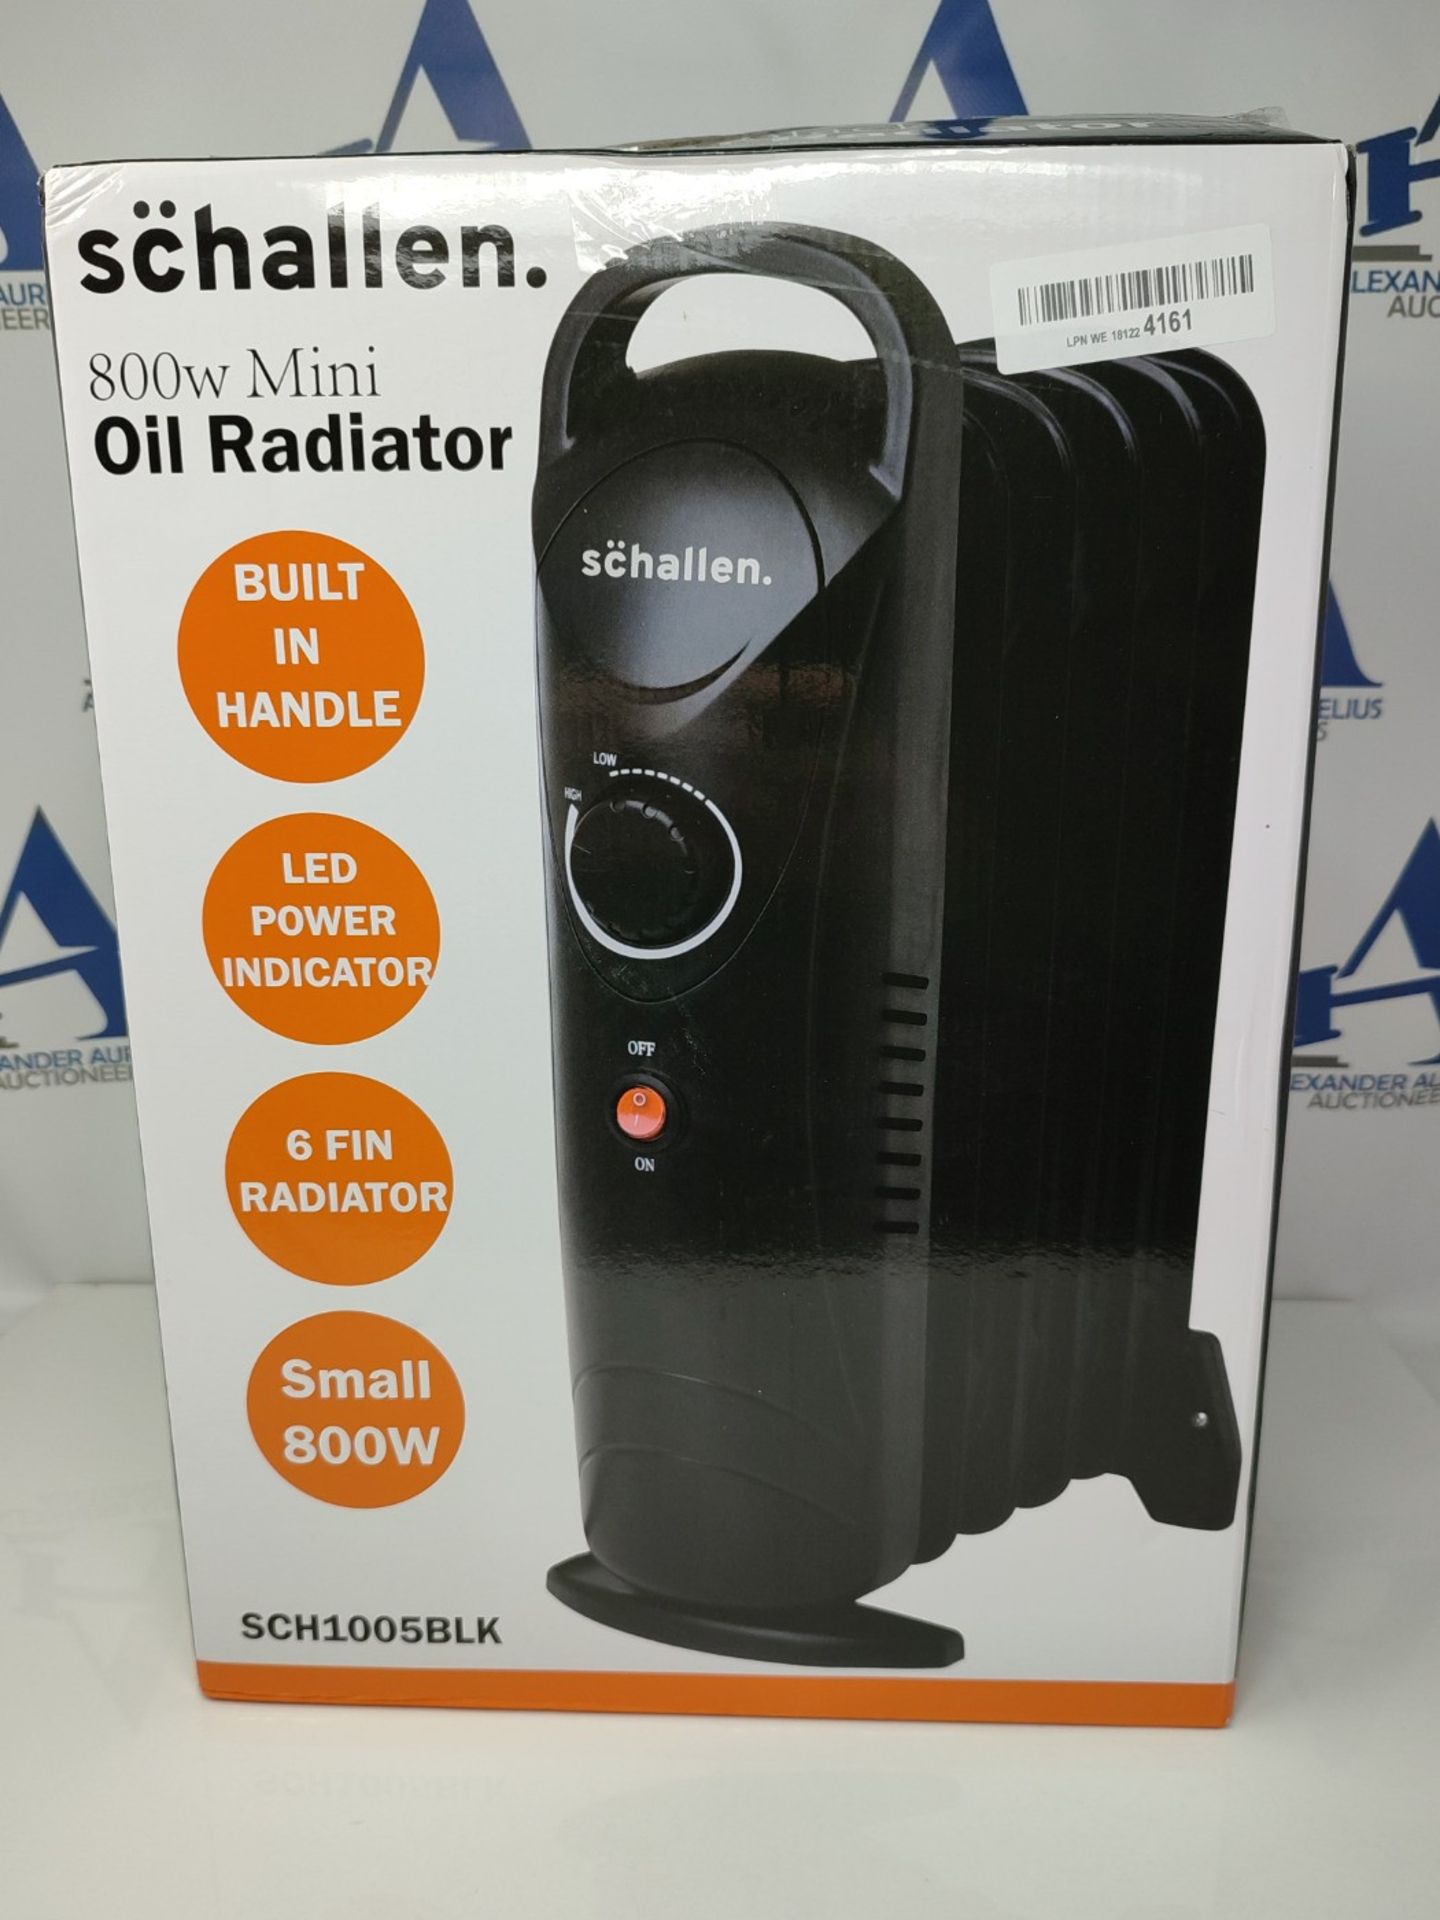 Schallen Black Portable Electric Slim Oil Filled Radiator Heater with Adjustable Tempe